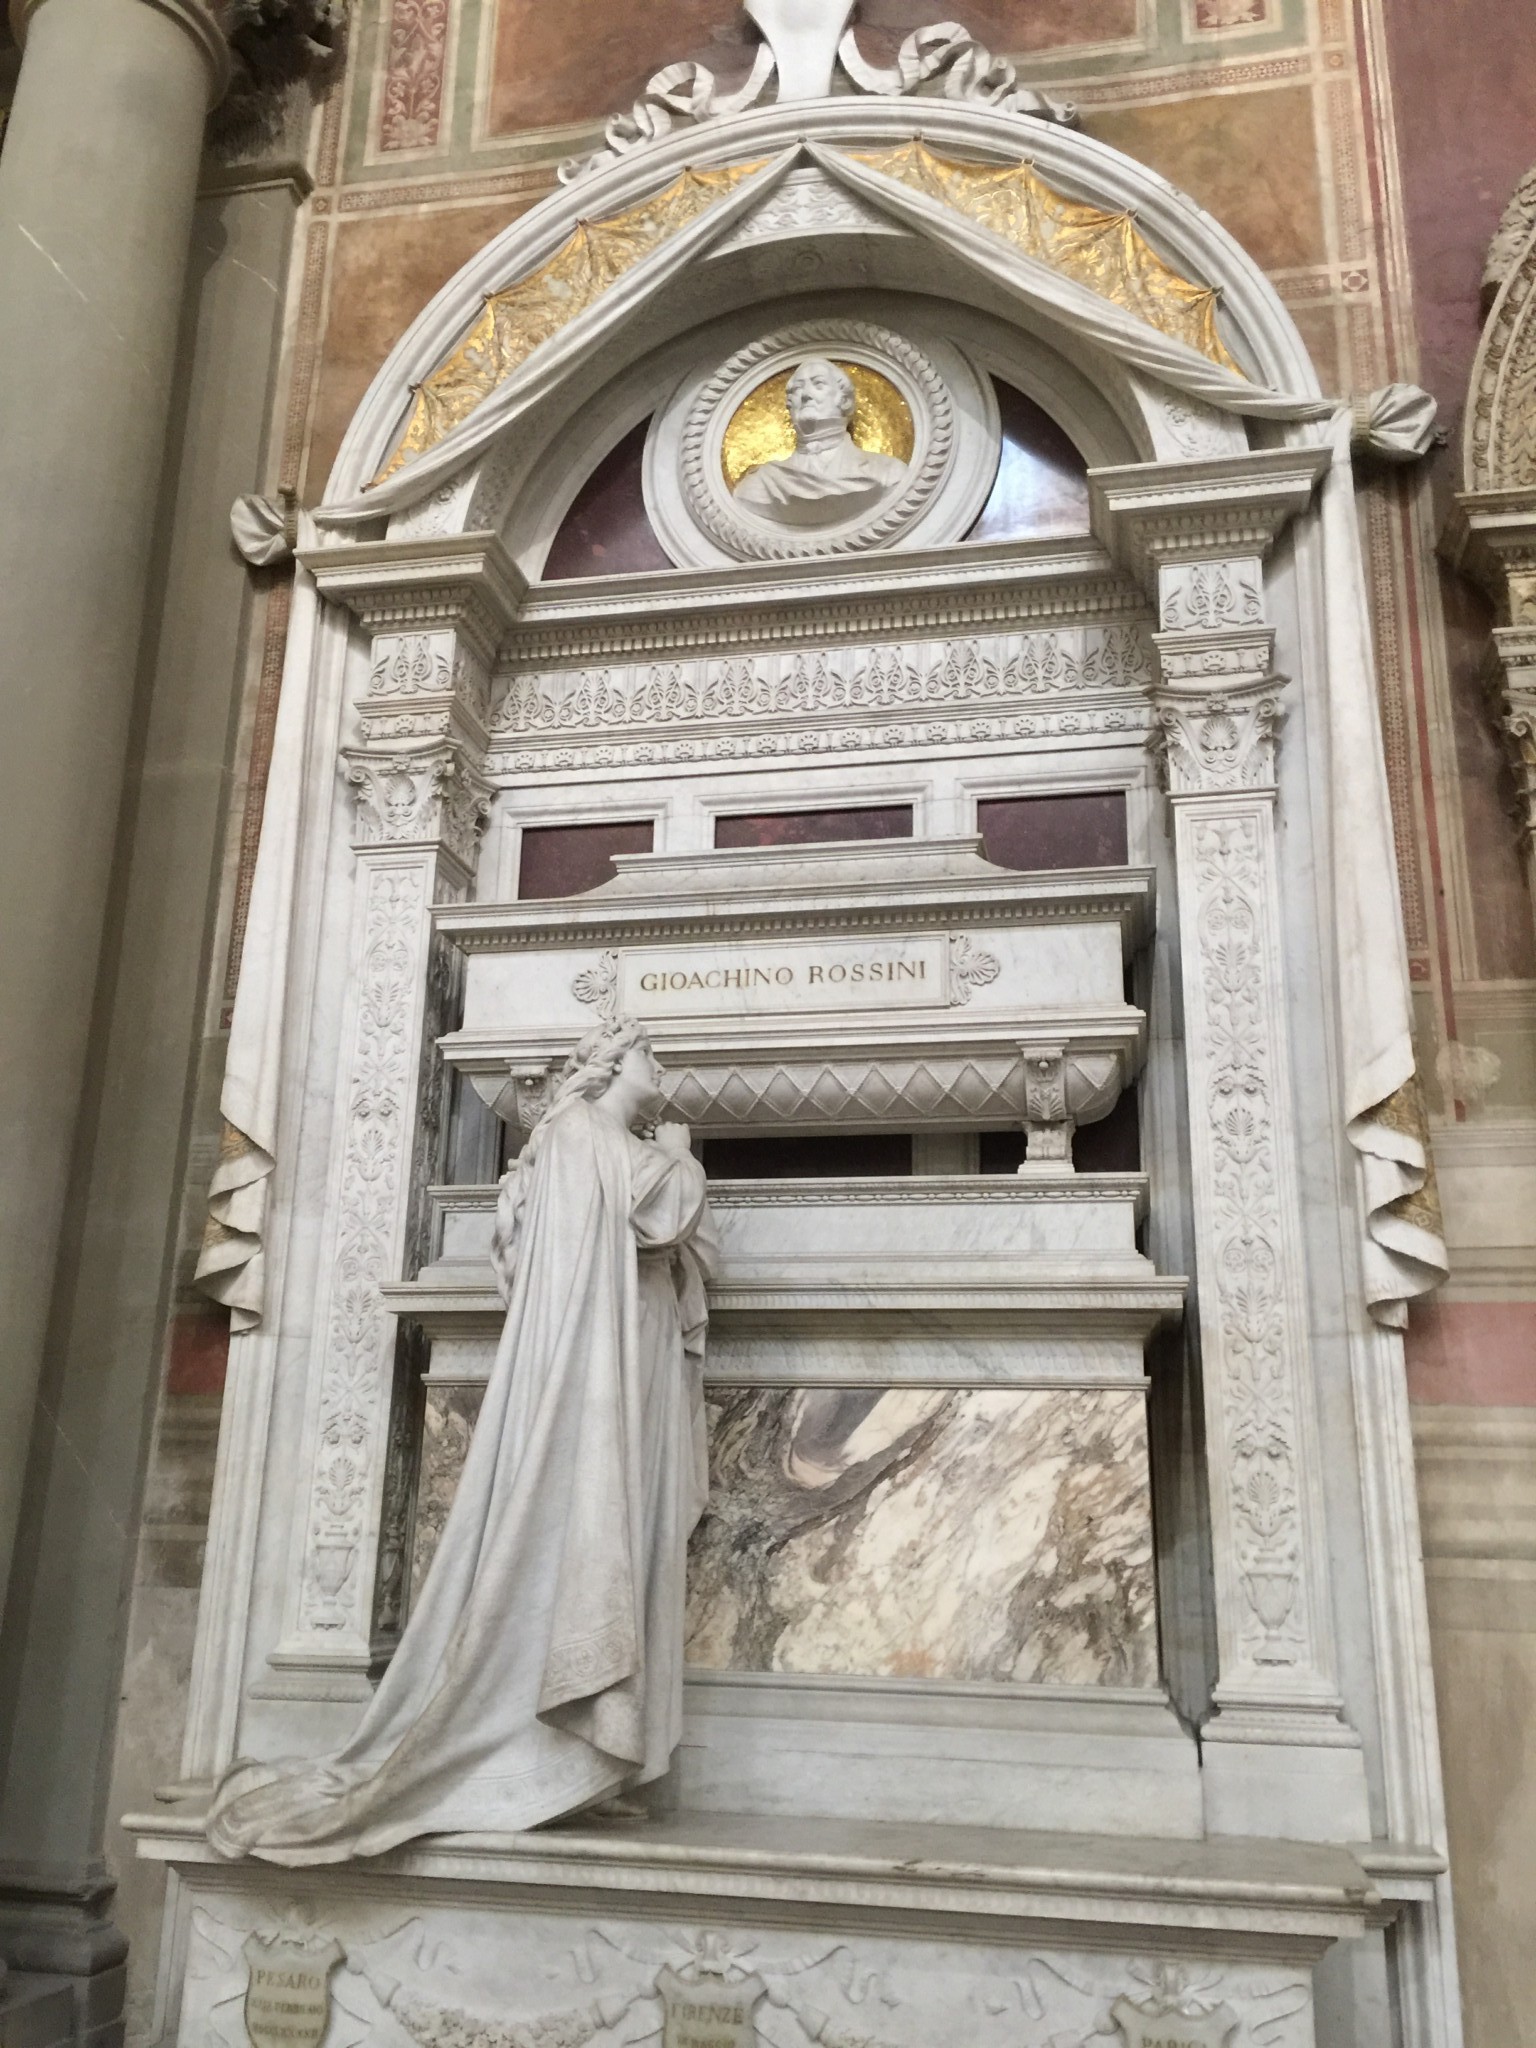 túmulo do compositor de ópera Gioachino Rossini